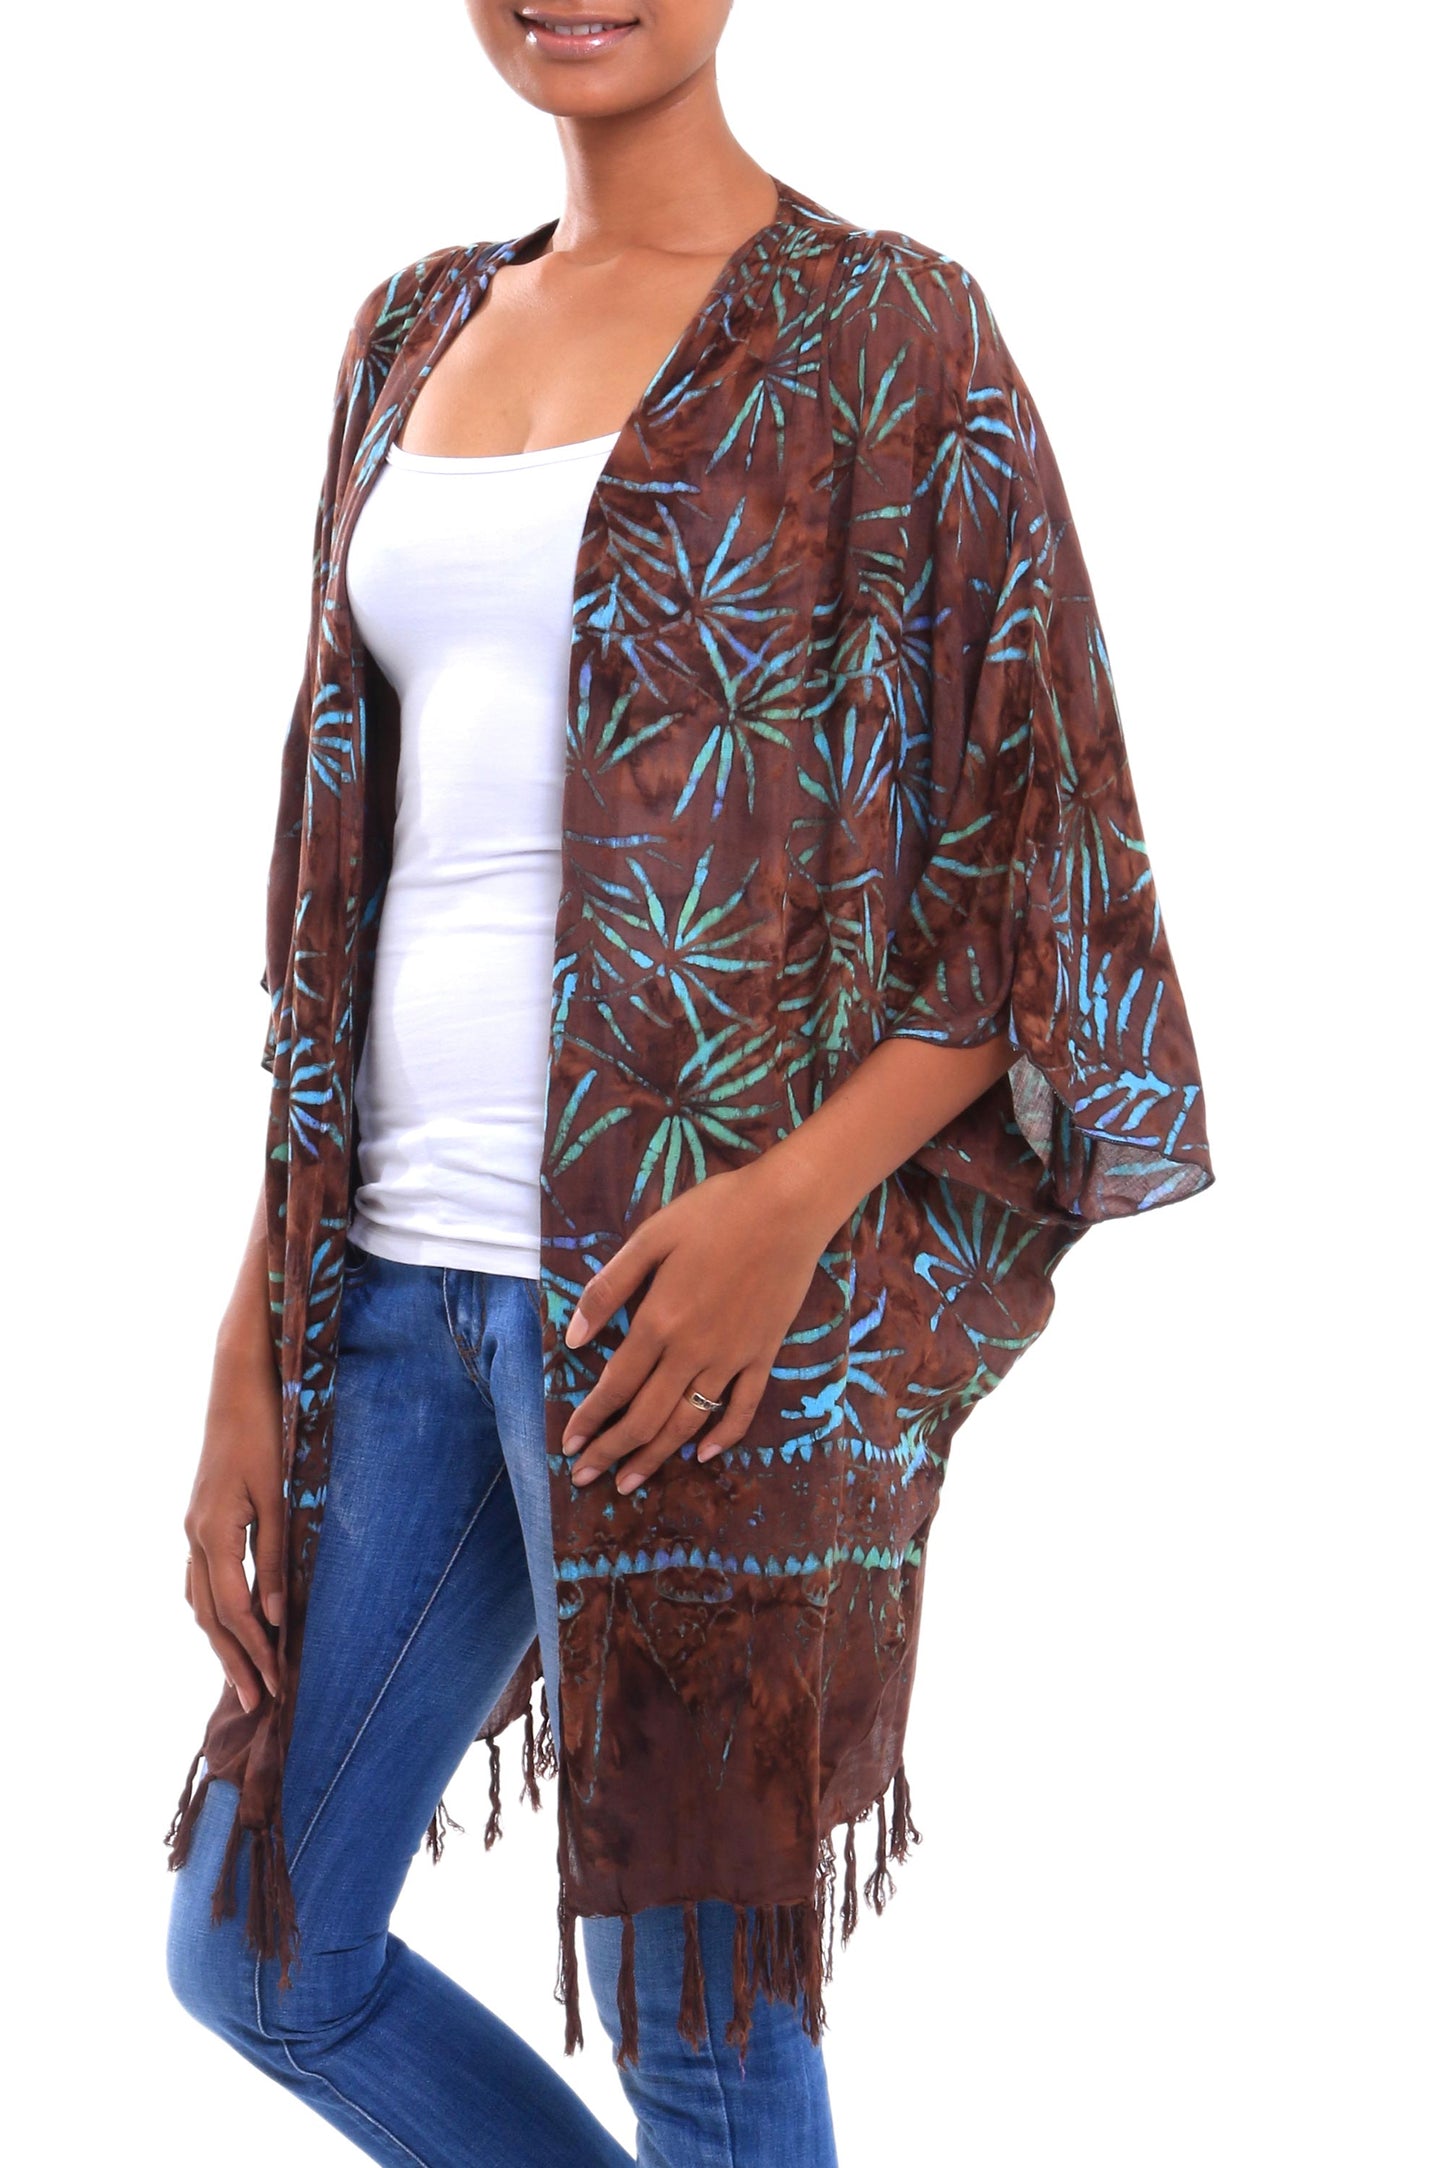 Denpasar Lady in Brown Leaf Motif Batik Rayon Kimono Jacket in Brown from Bali